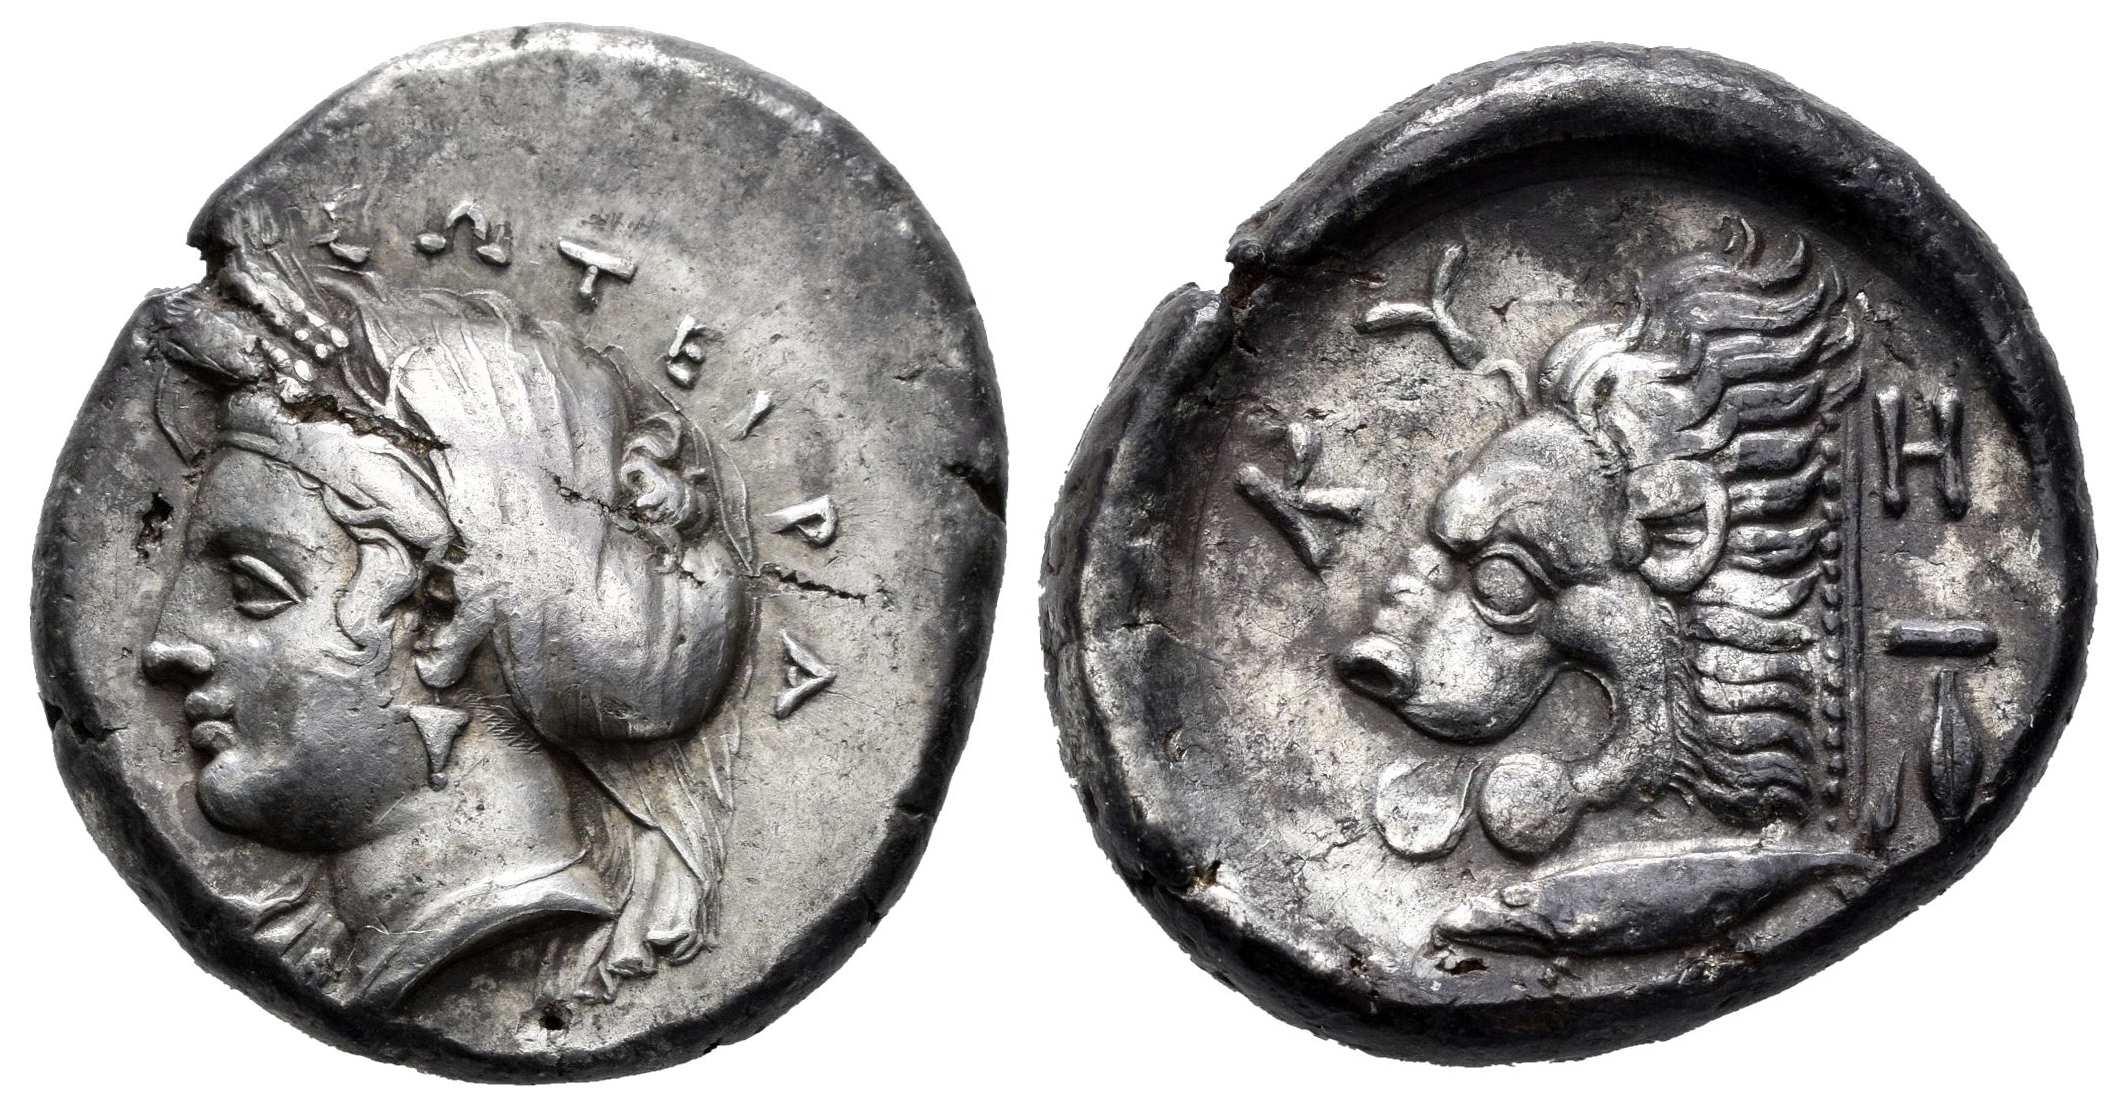 Lot 23. Mysia. Kyzikos. Tetradrachm. 390-340 BCE. Images courtesy Tauler and Fau